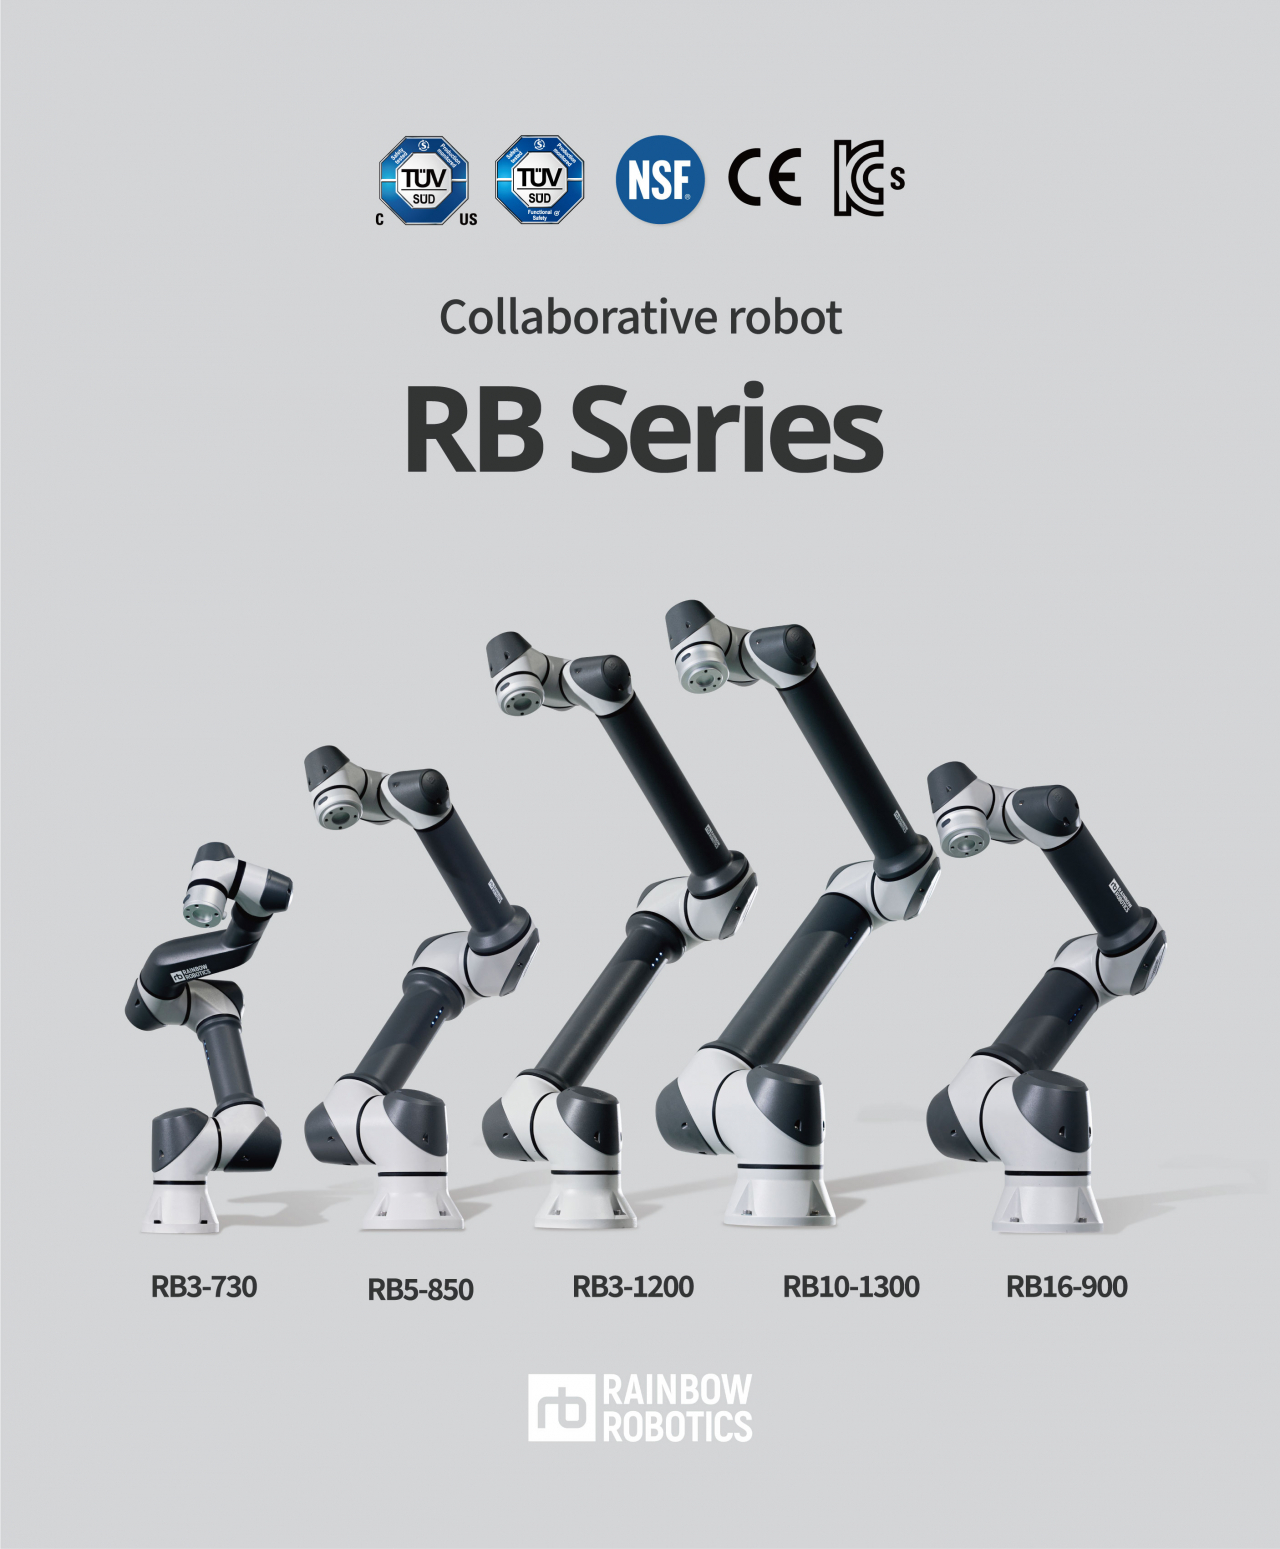 Rainbow Robotics’ collaborative robot RB Series (Rainbow Robotics)